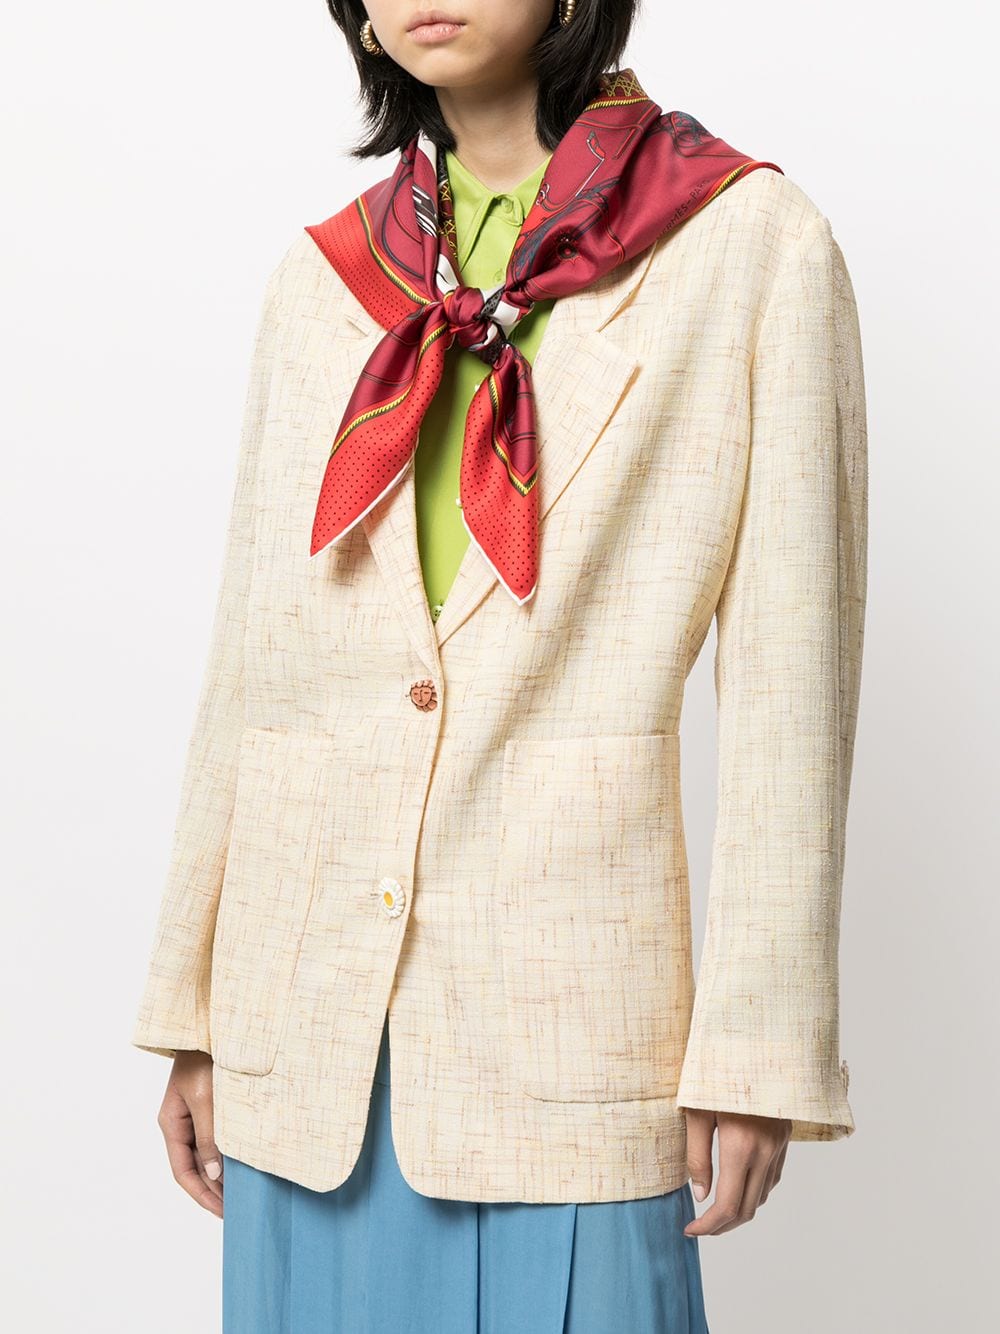 Printed silk scarf 'Les Voitures à transformation', Hermès